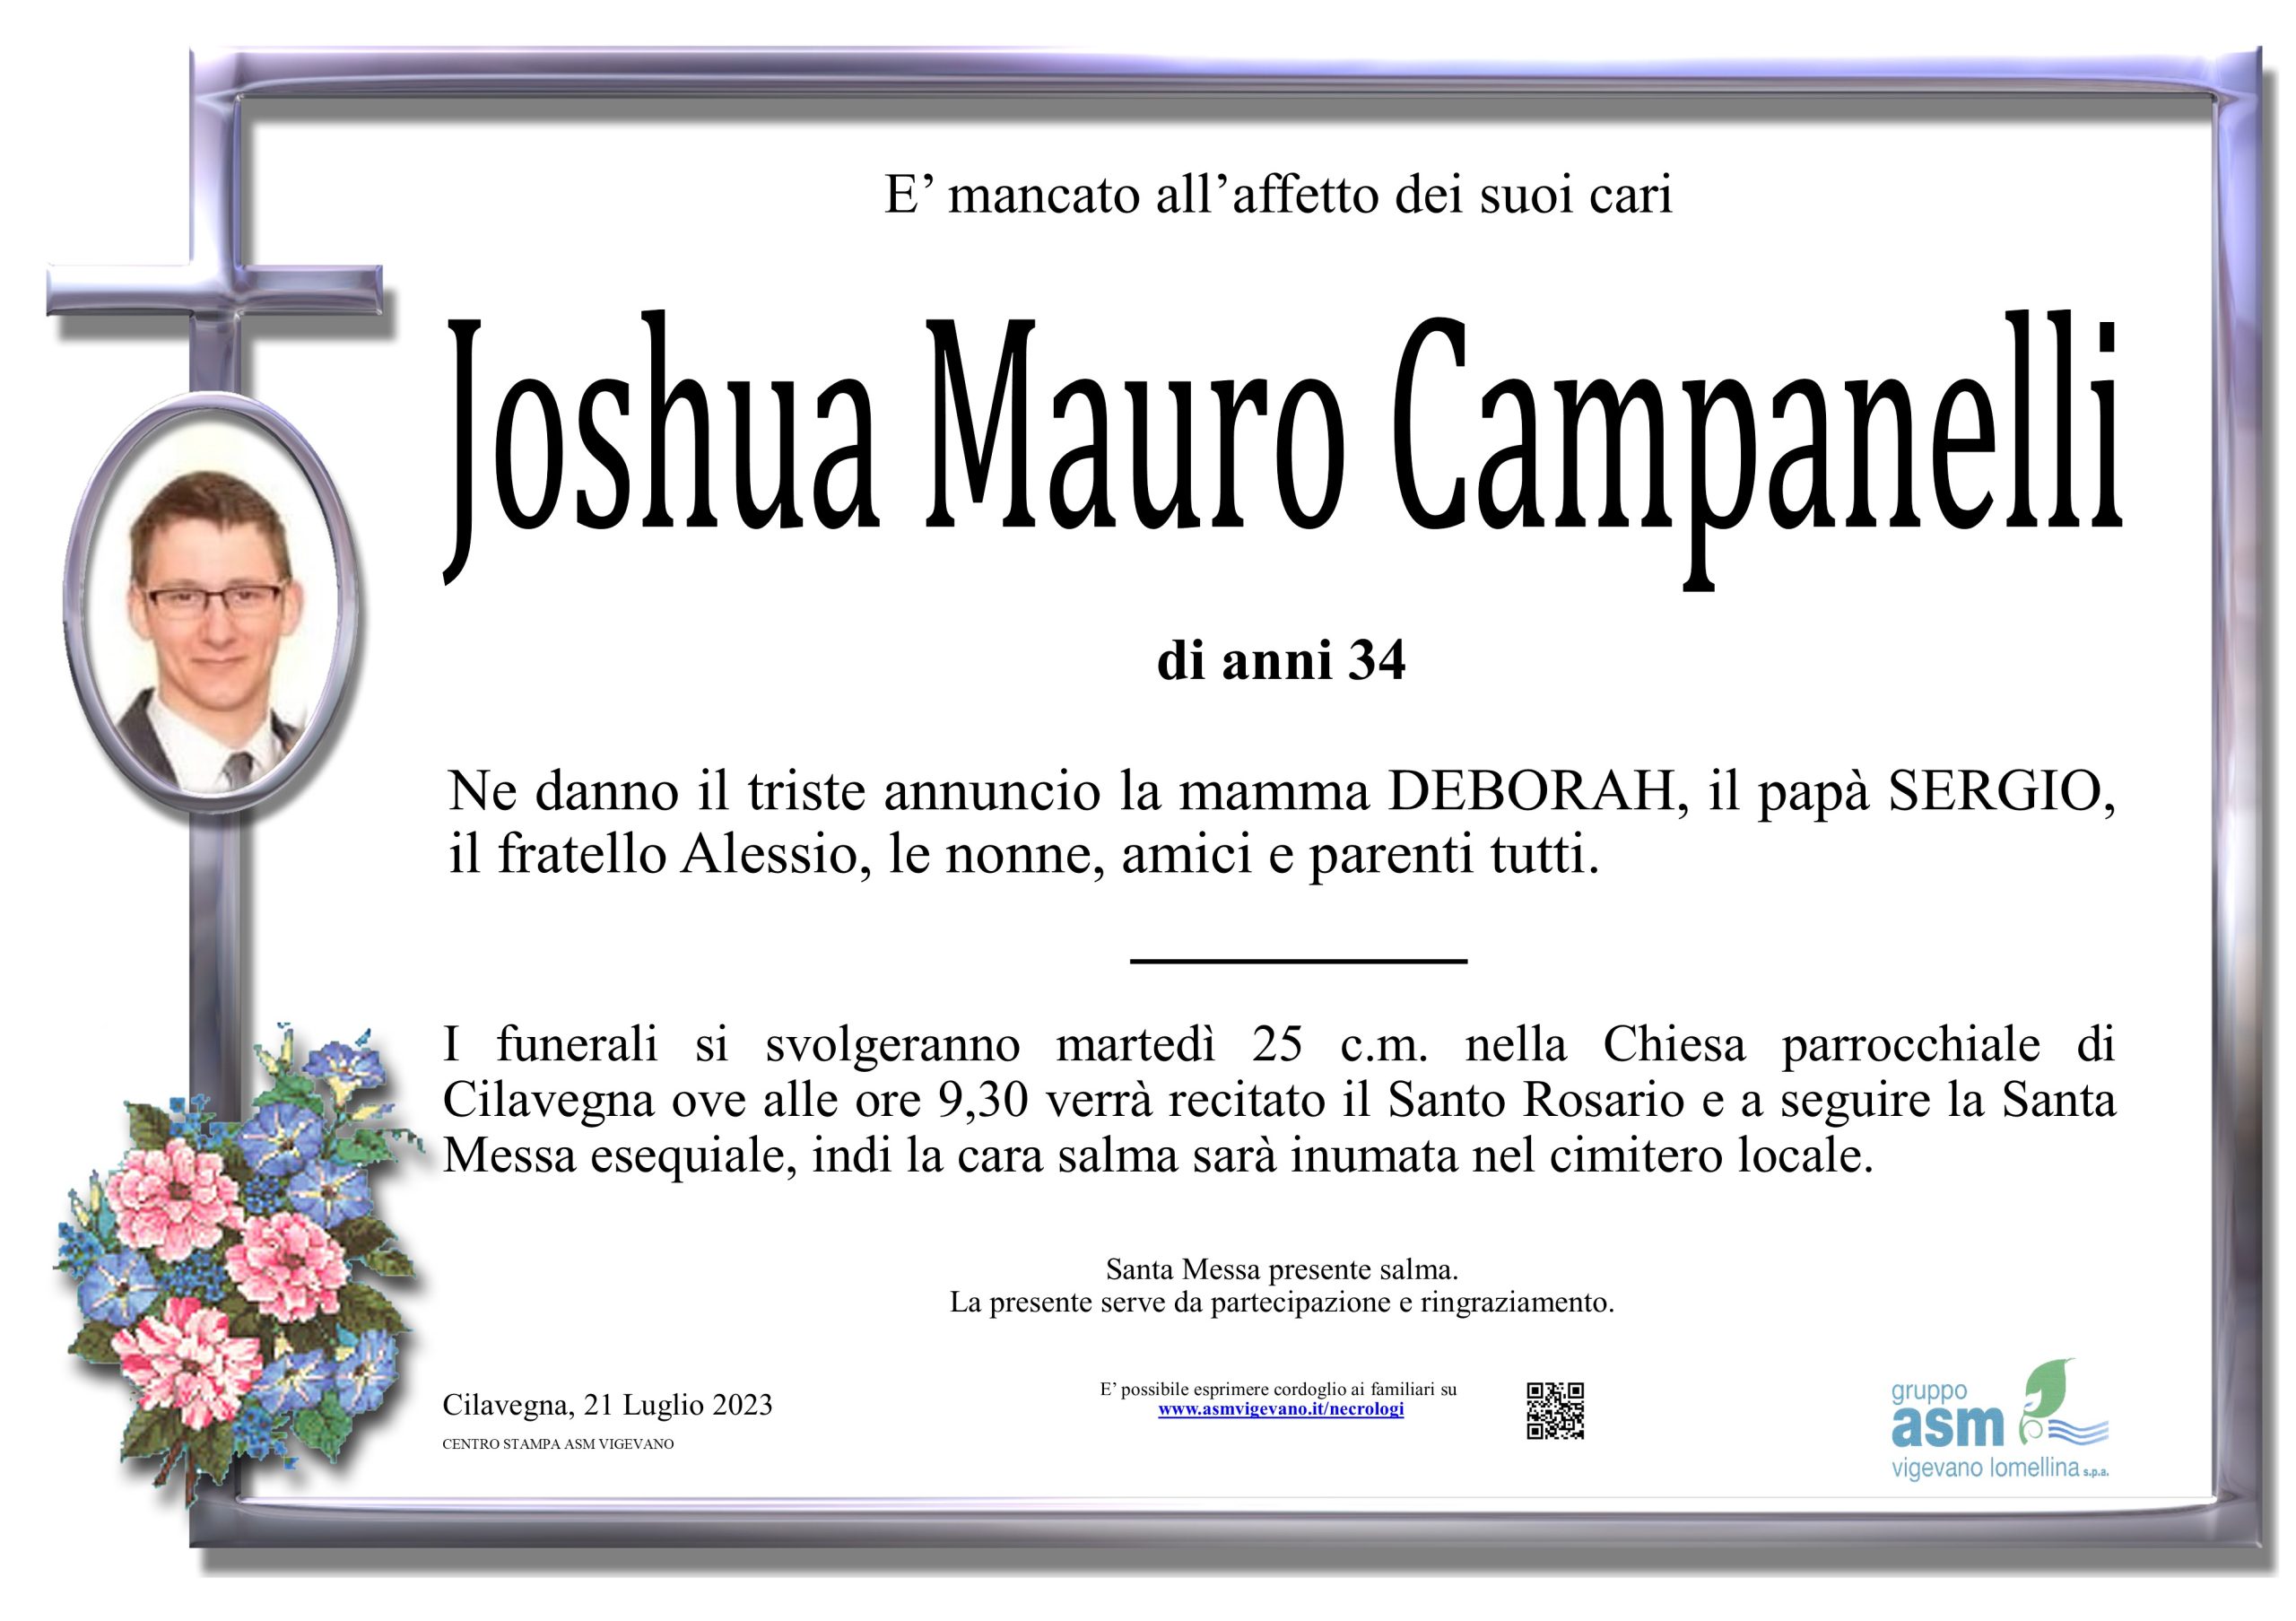 Joshua Mauro Campanelli